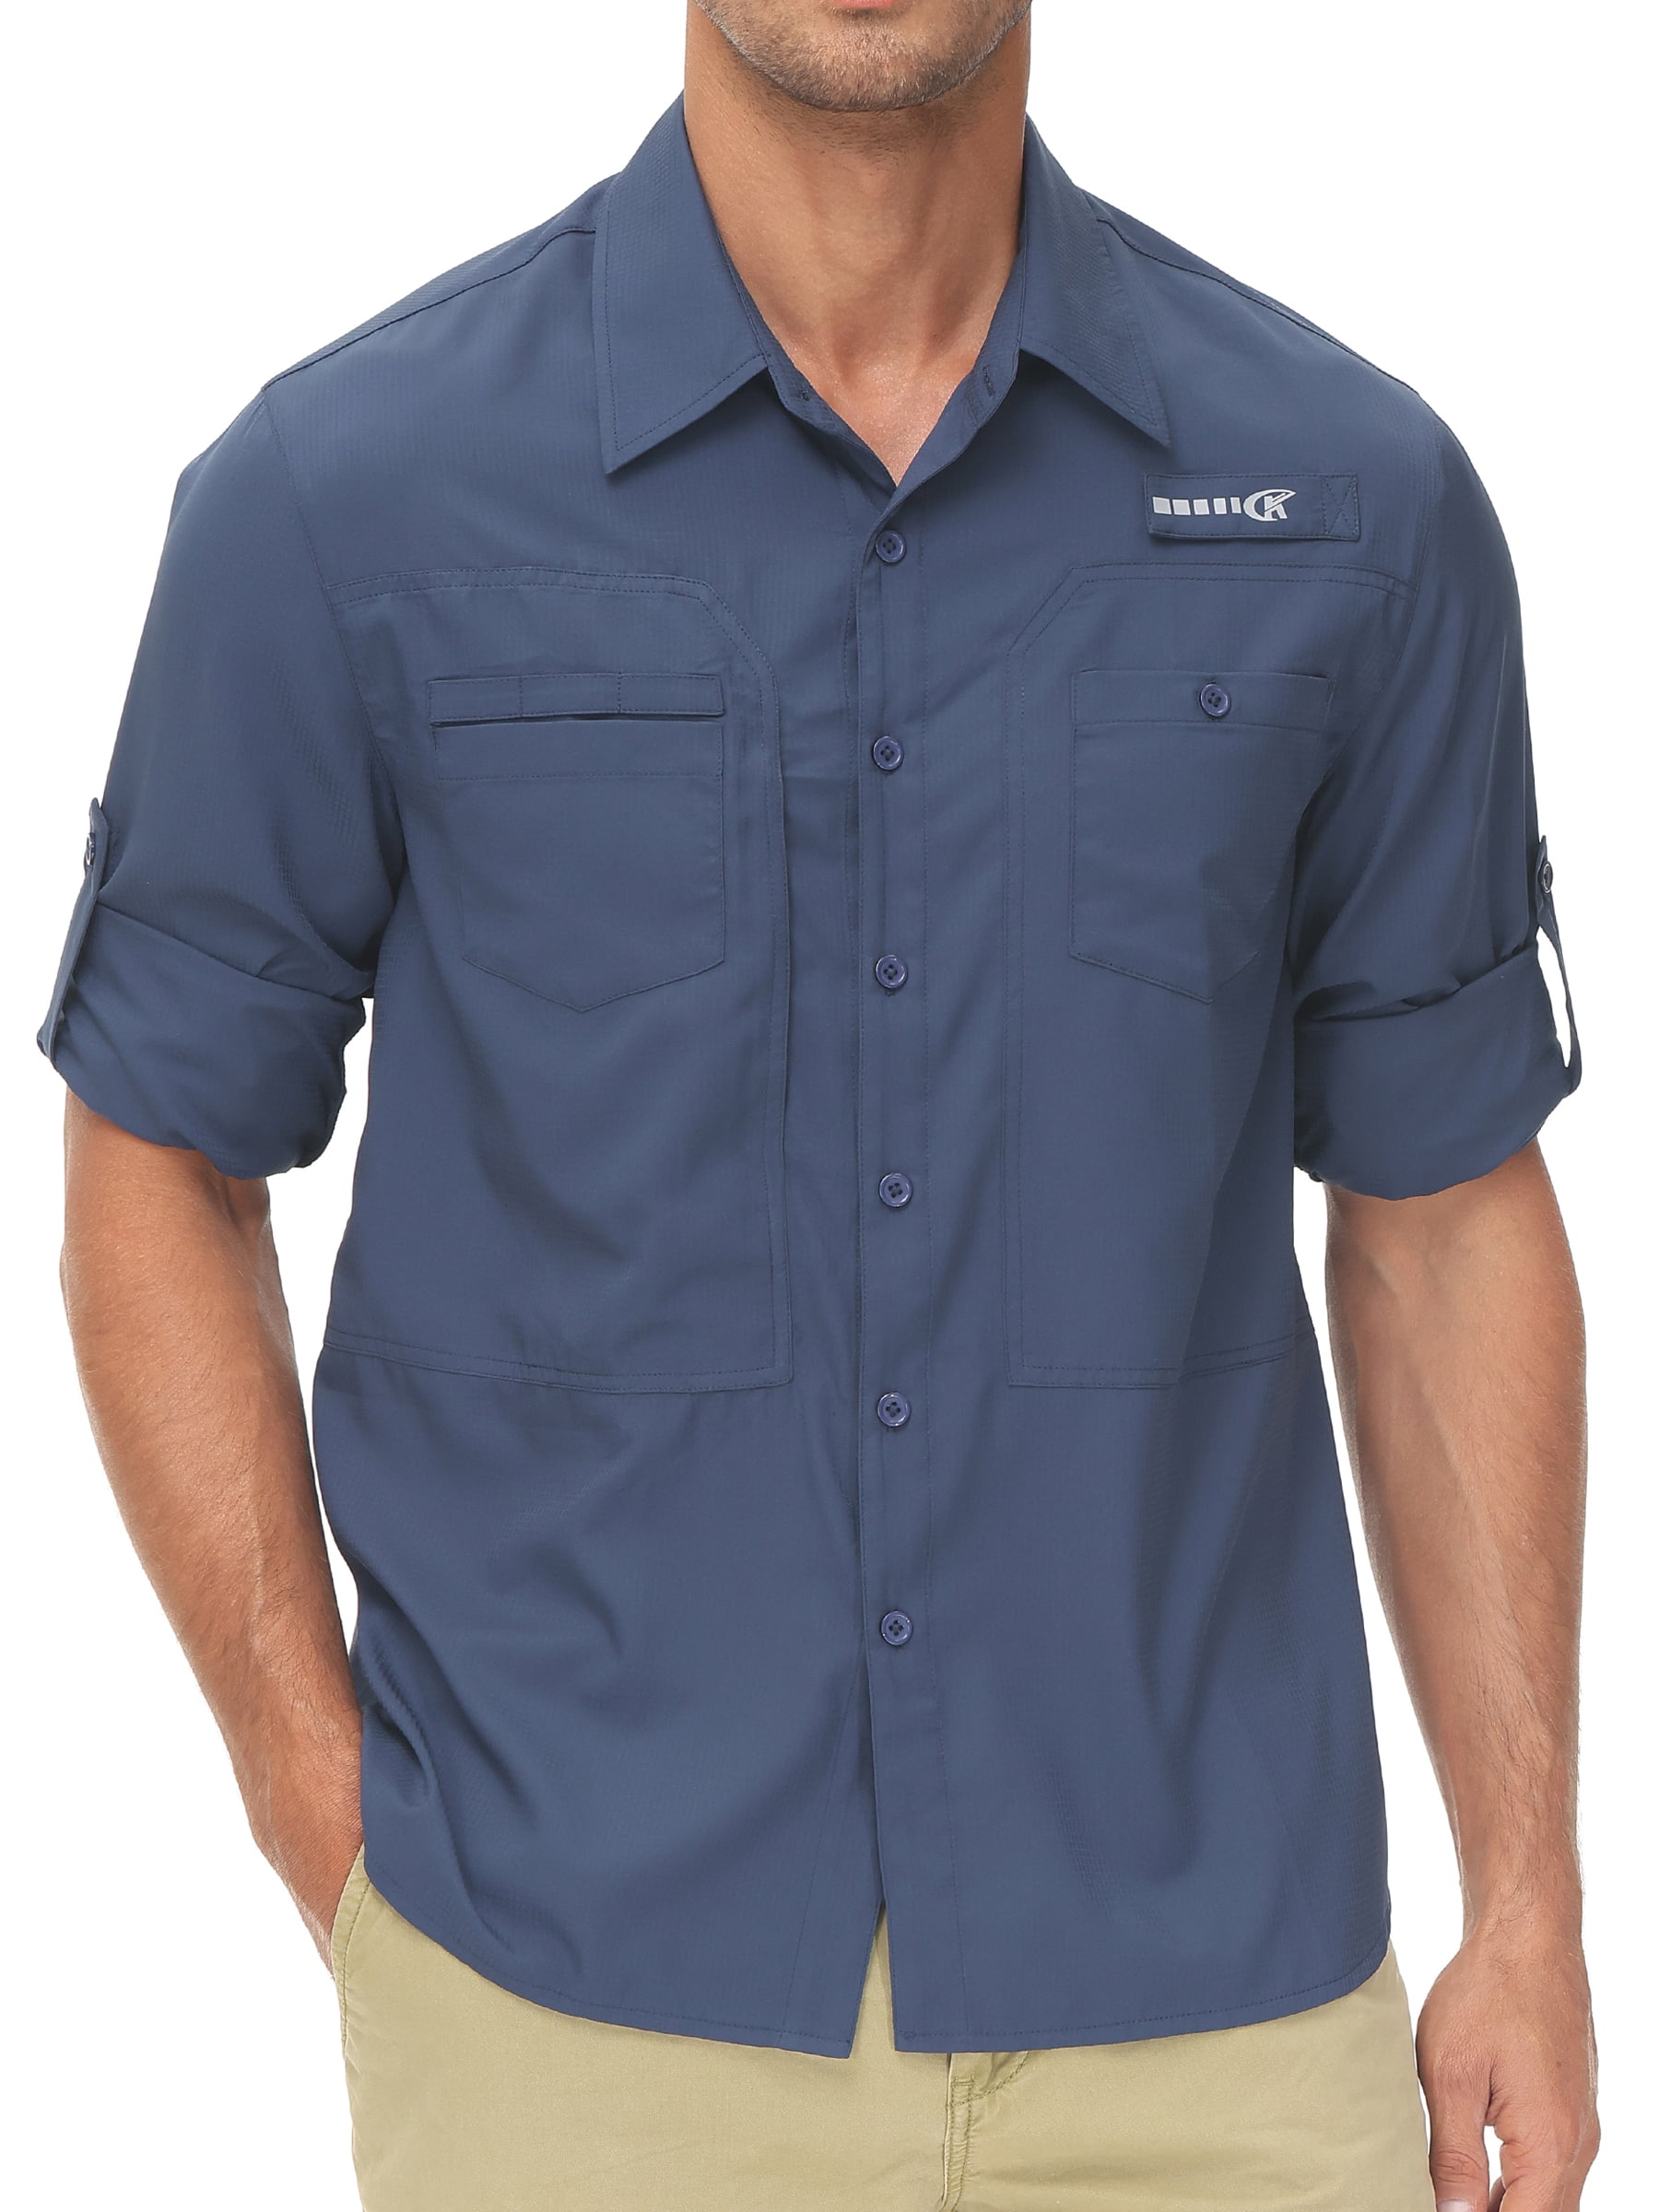 Pdbokew Men's Sun Protection Fishing Shirts Long Sleeve Travel Work Shirts  for Men UPF50+ Button Down Shirts with Zipper Pockets Navy S